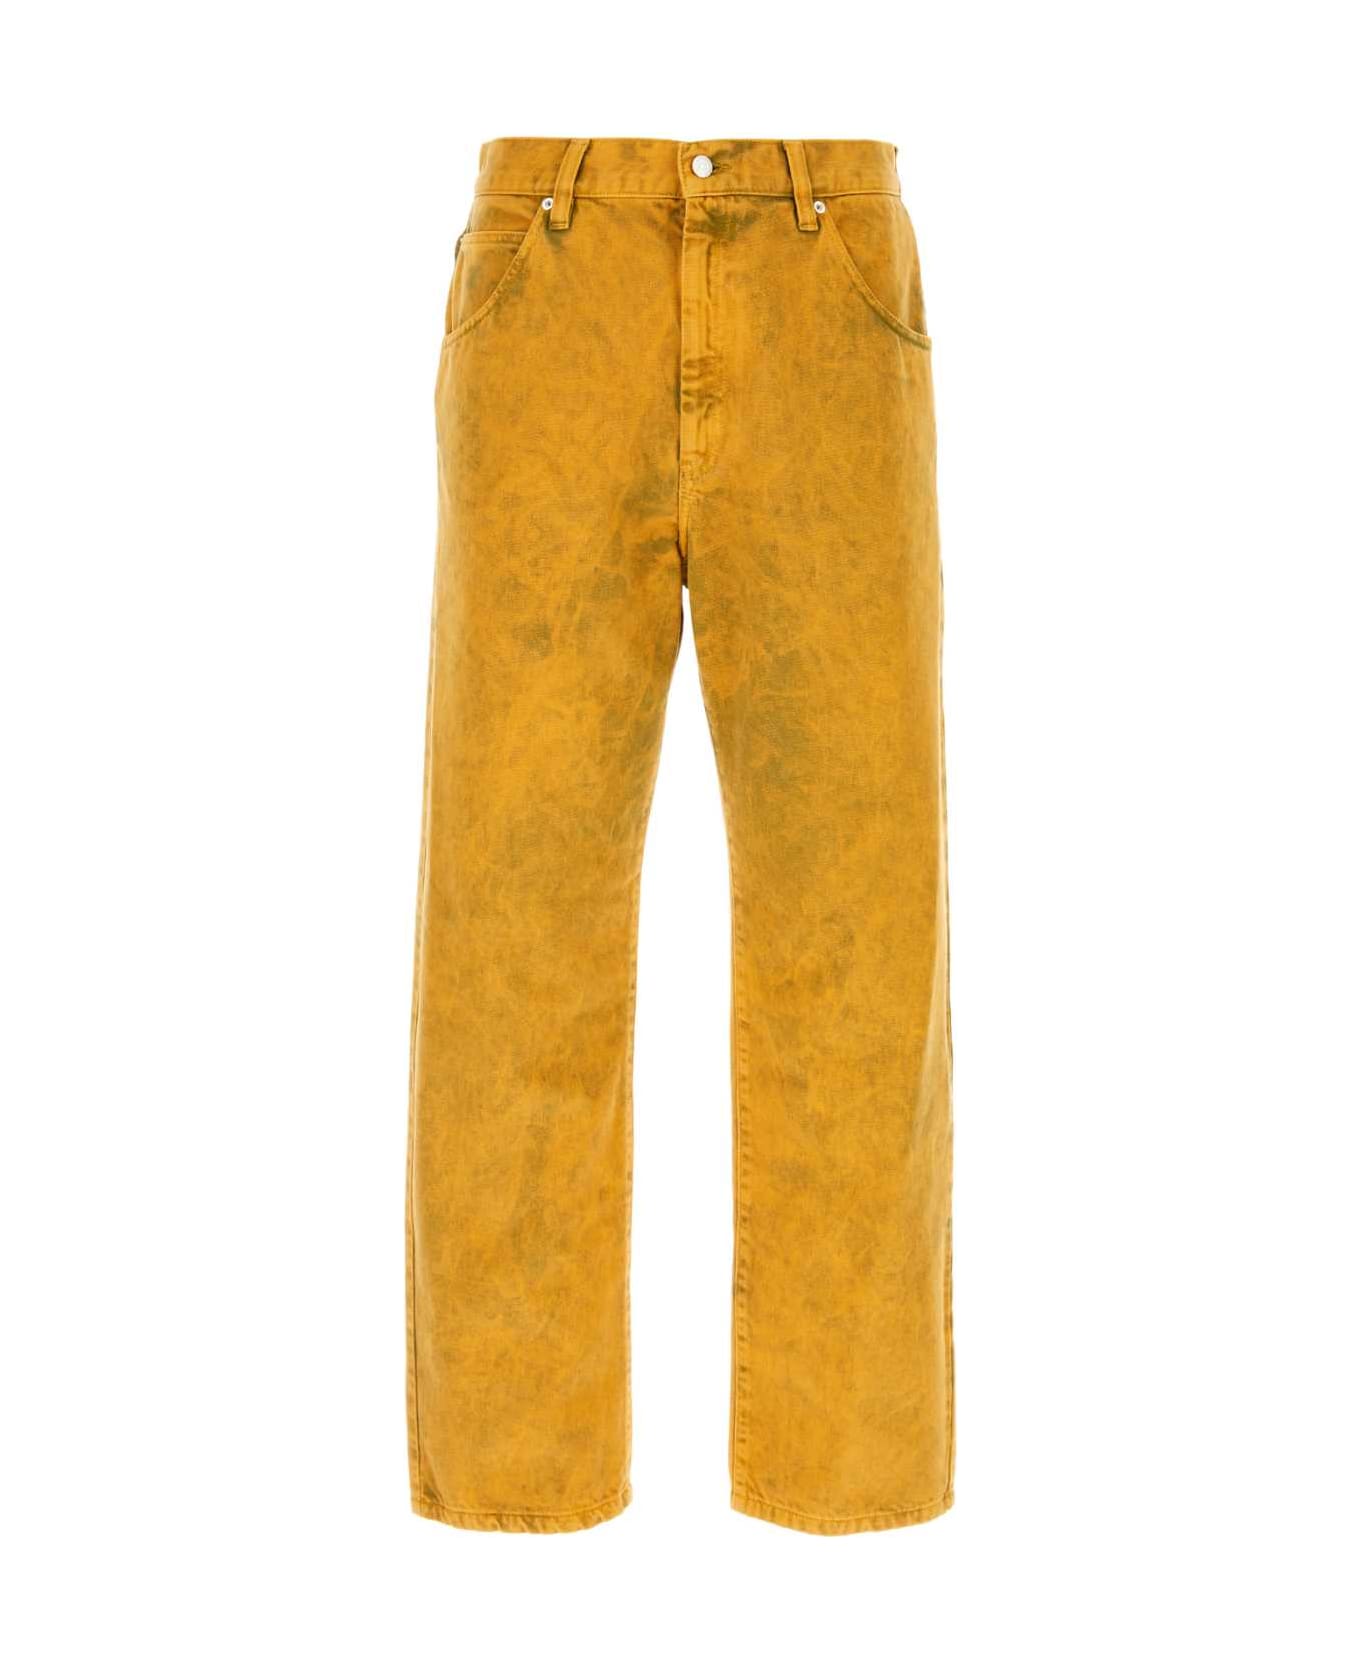 Namacheko Yellow Denim Warkworth Jeans - SKYMAGICIVORYFROSTEDKHAKI